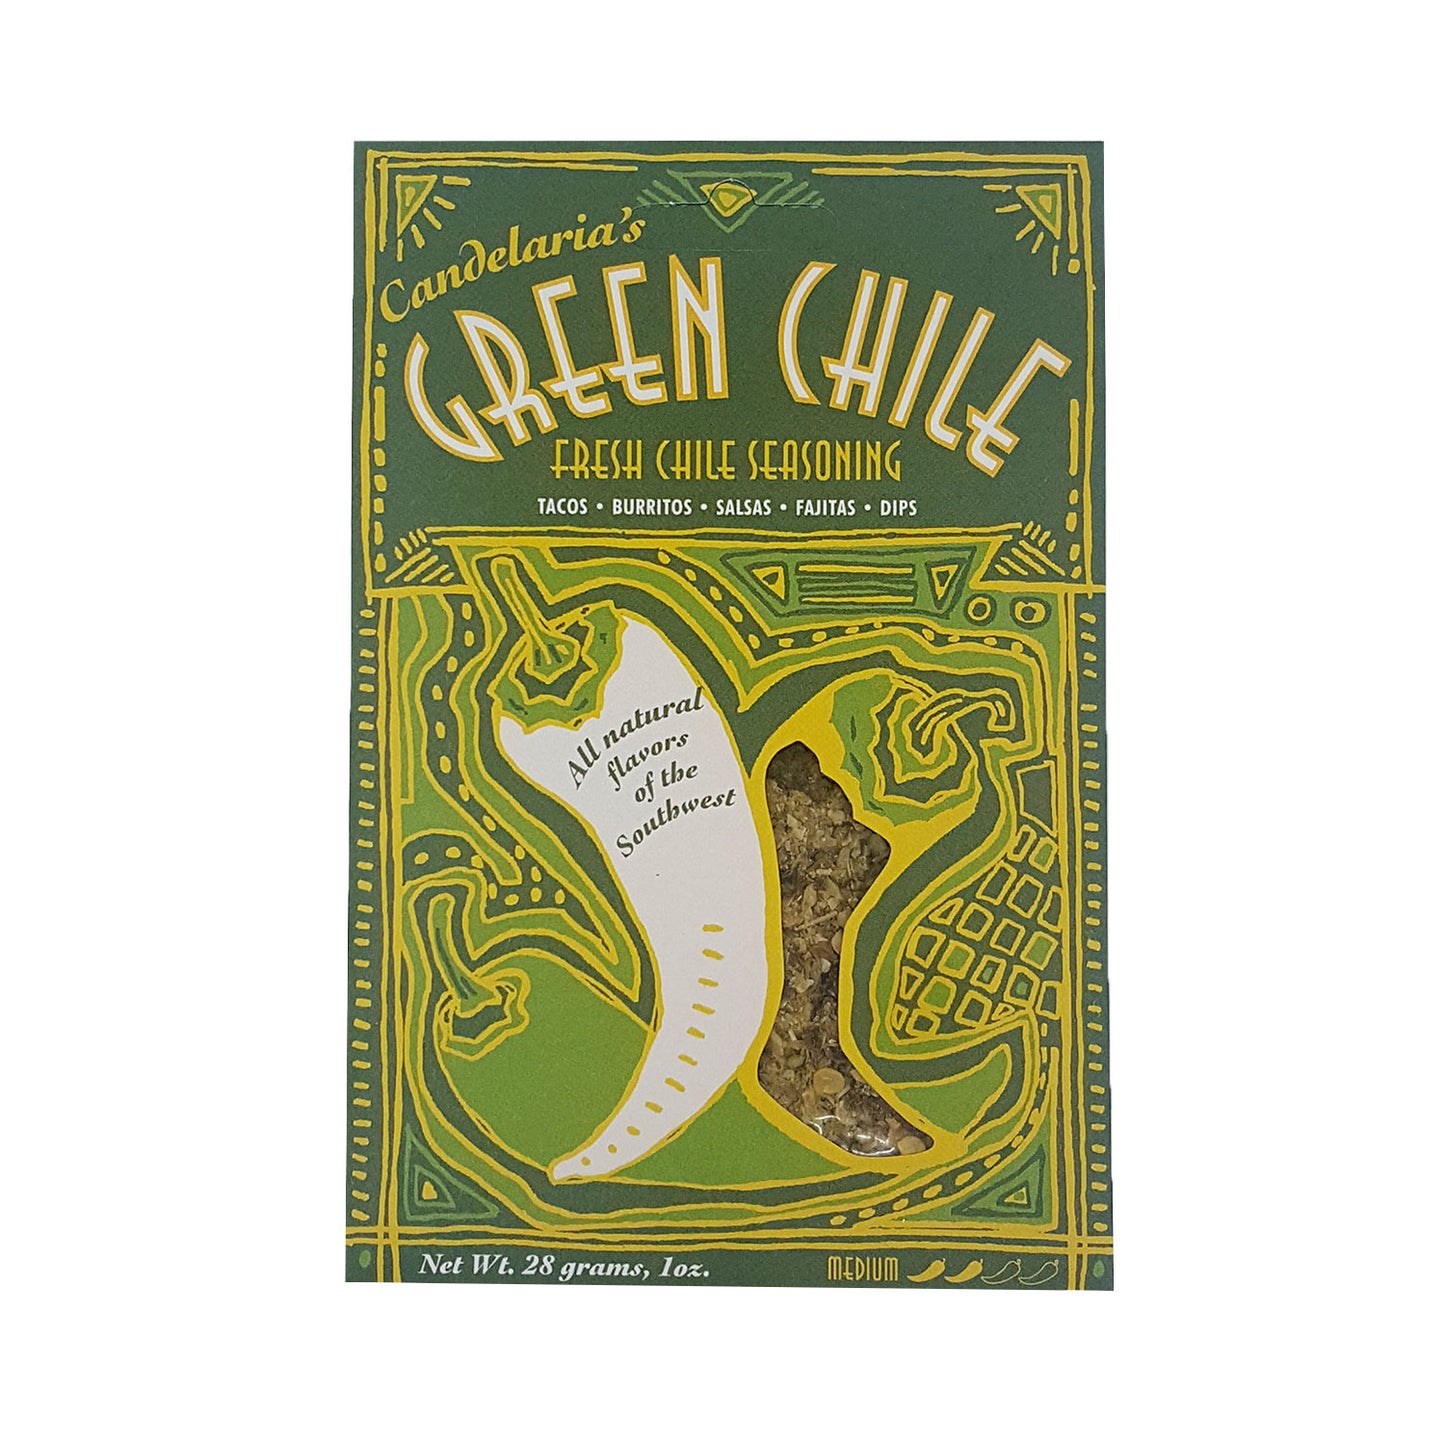 Candelaria's: Green Chile - Fresh Chile Seasoning